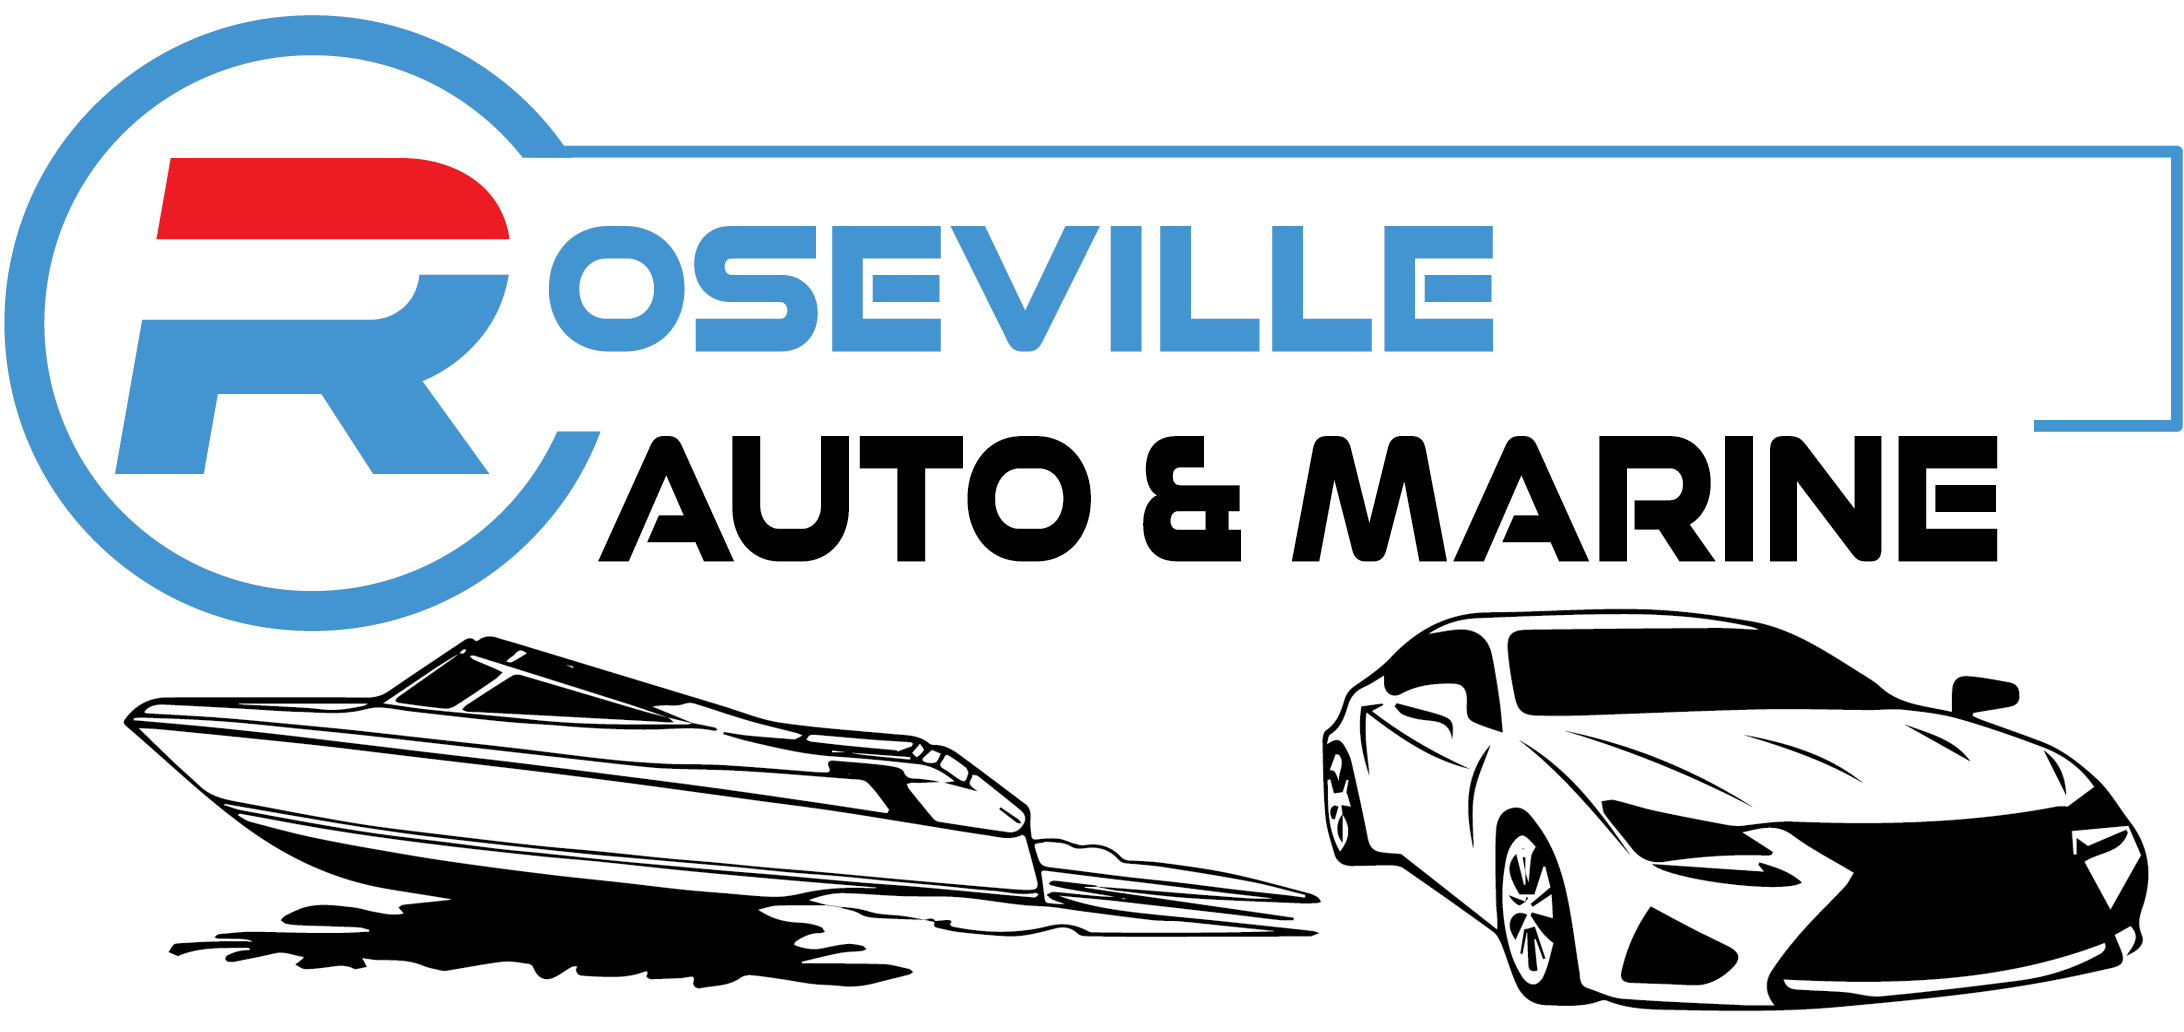 Roseville Auto & Marine Inc